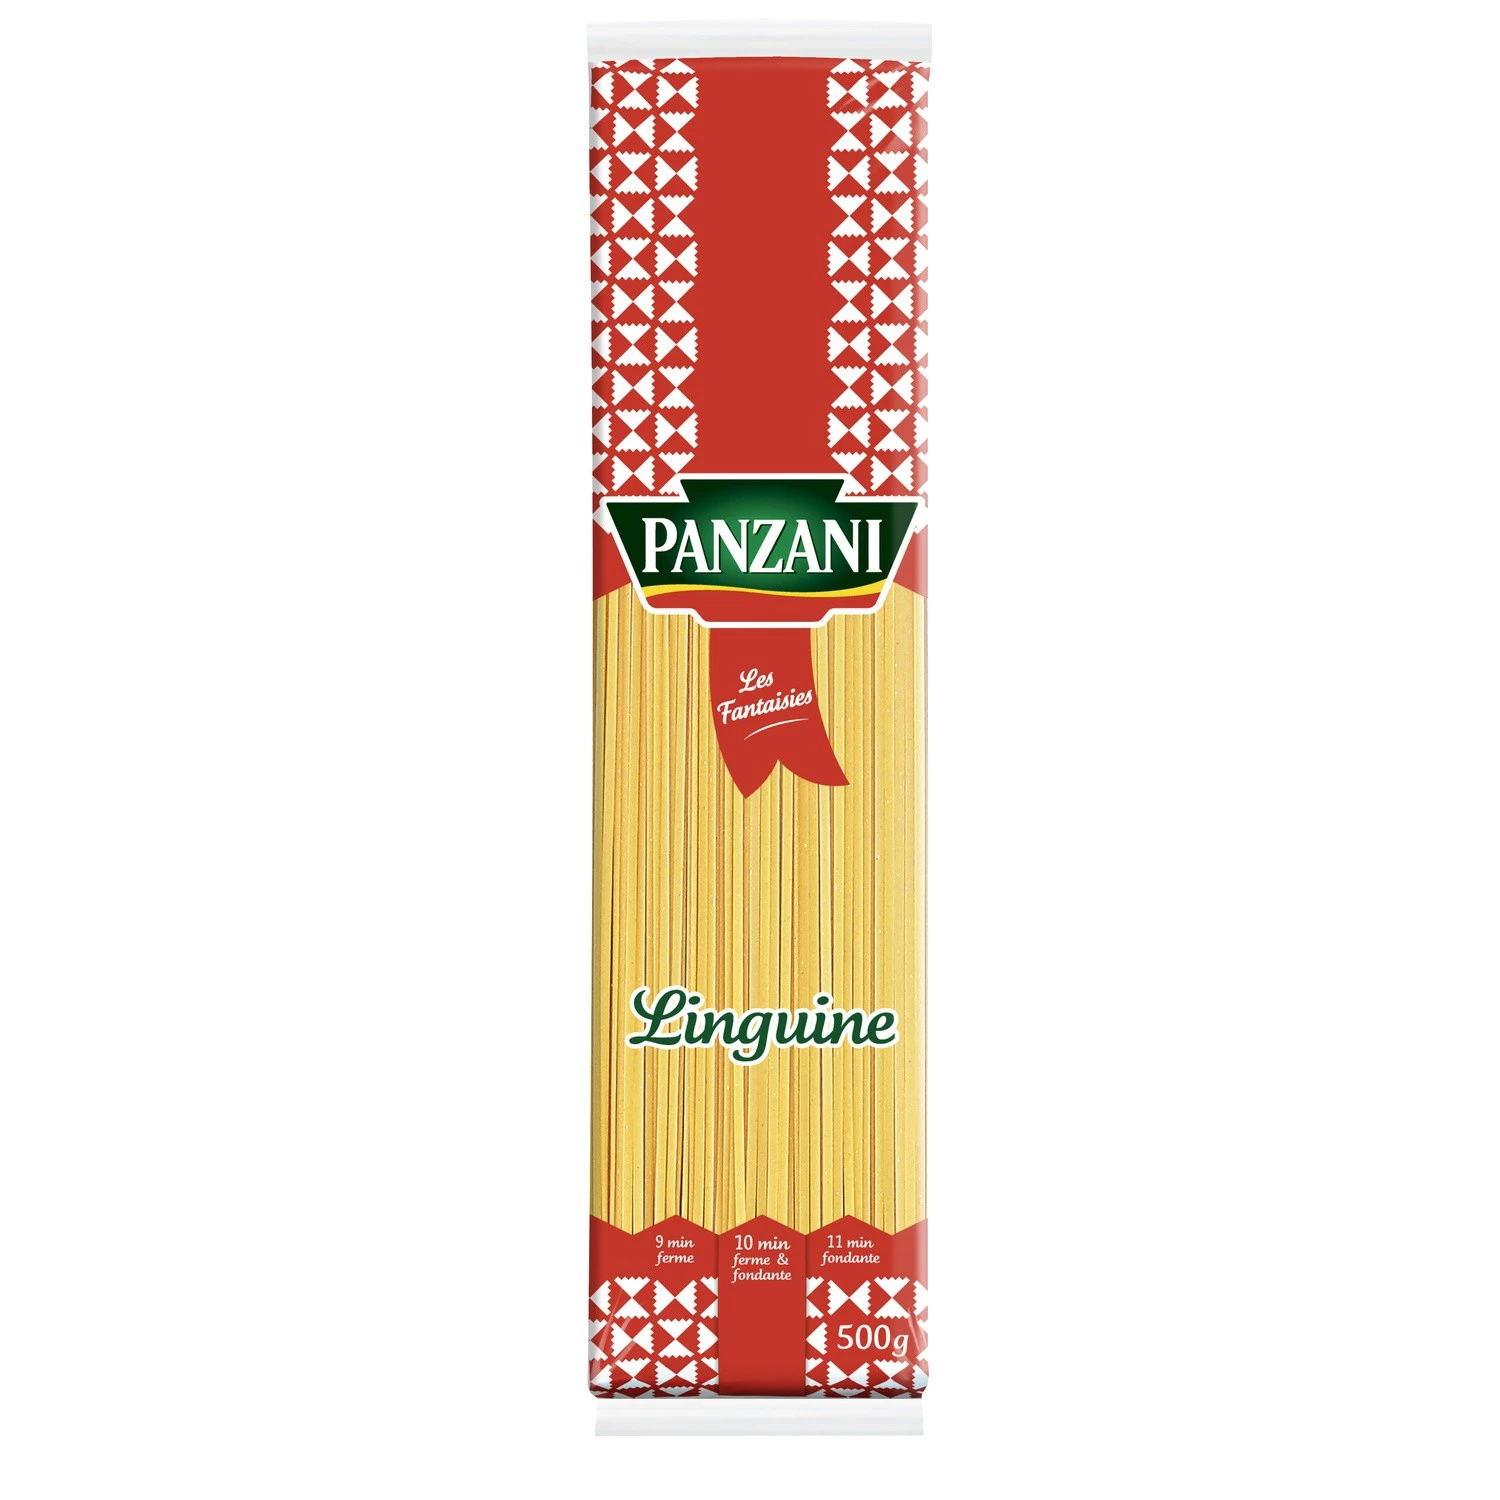 Mì Ý Spaghetti Linguine, 500g - PANZANI